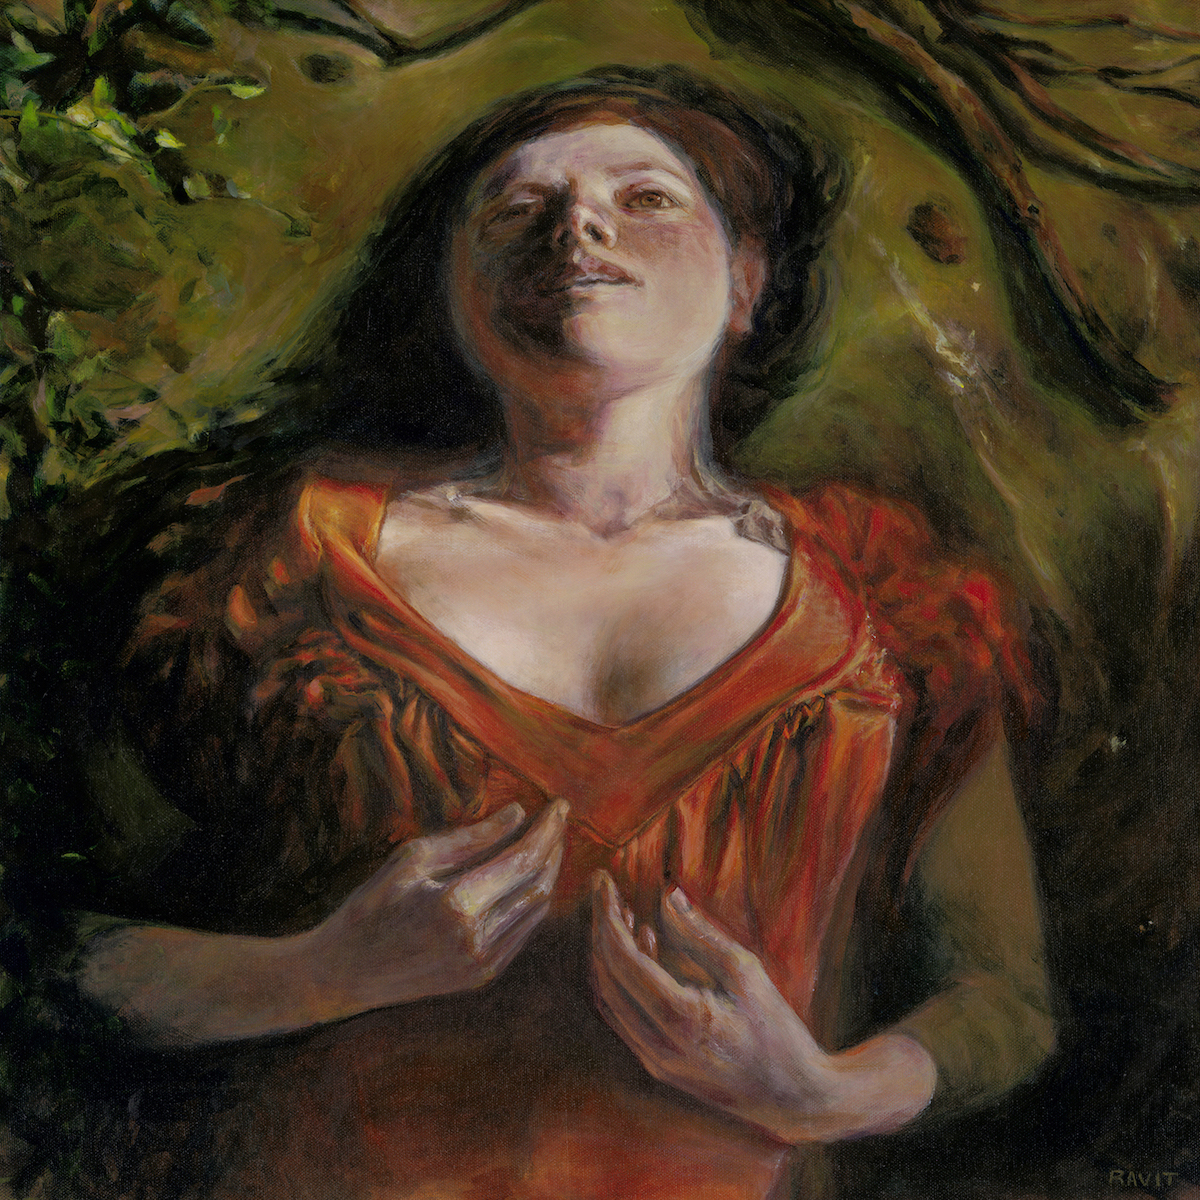 'The Woman In The Lake', Ravit Madar Einhorn, Acrylic on canvas, 50 x 50 cm